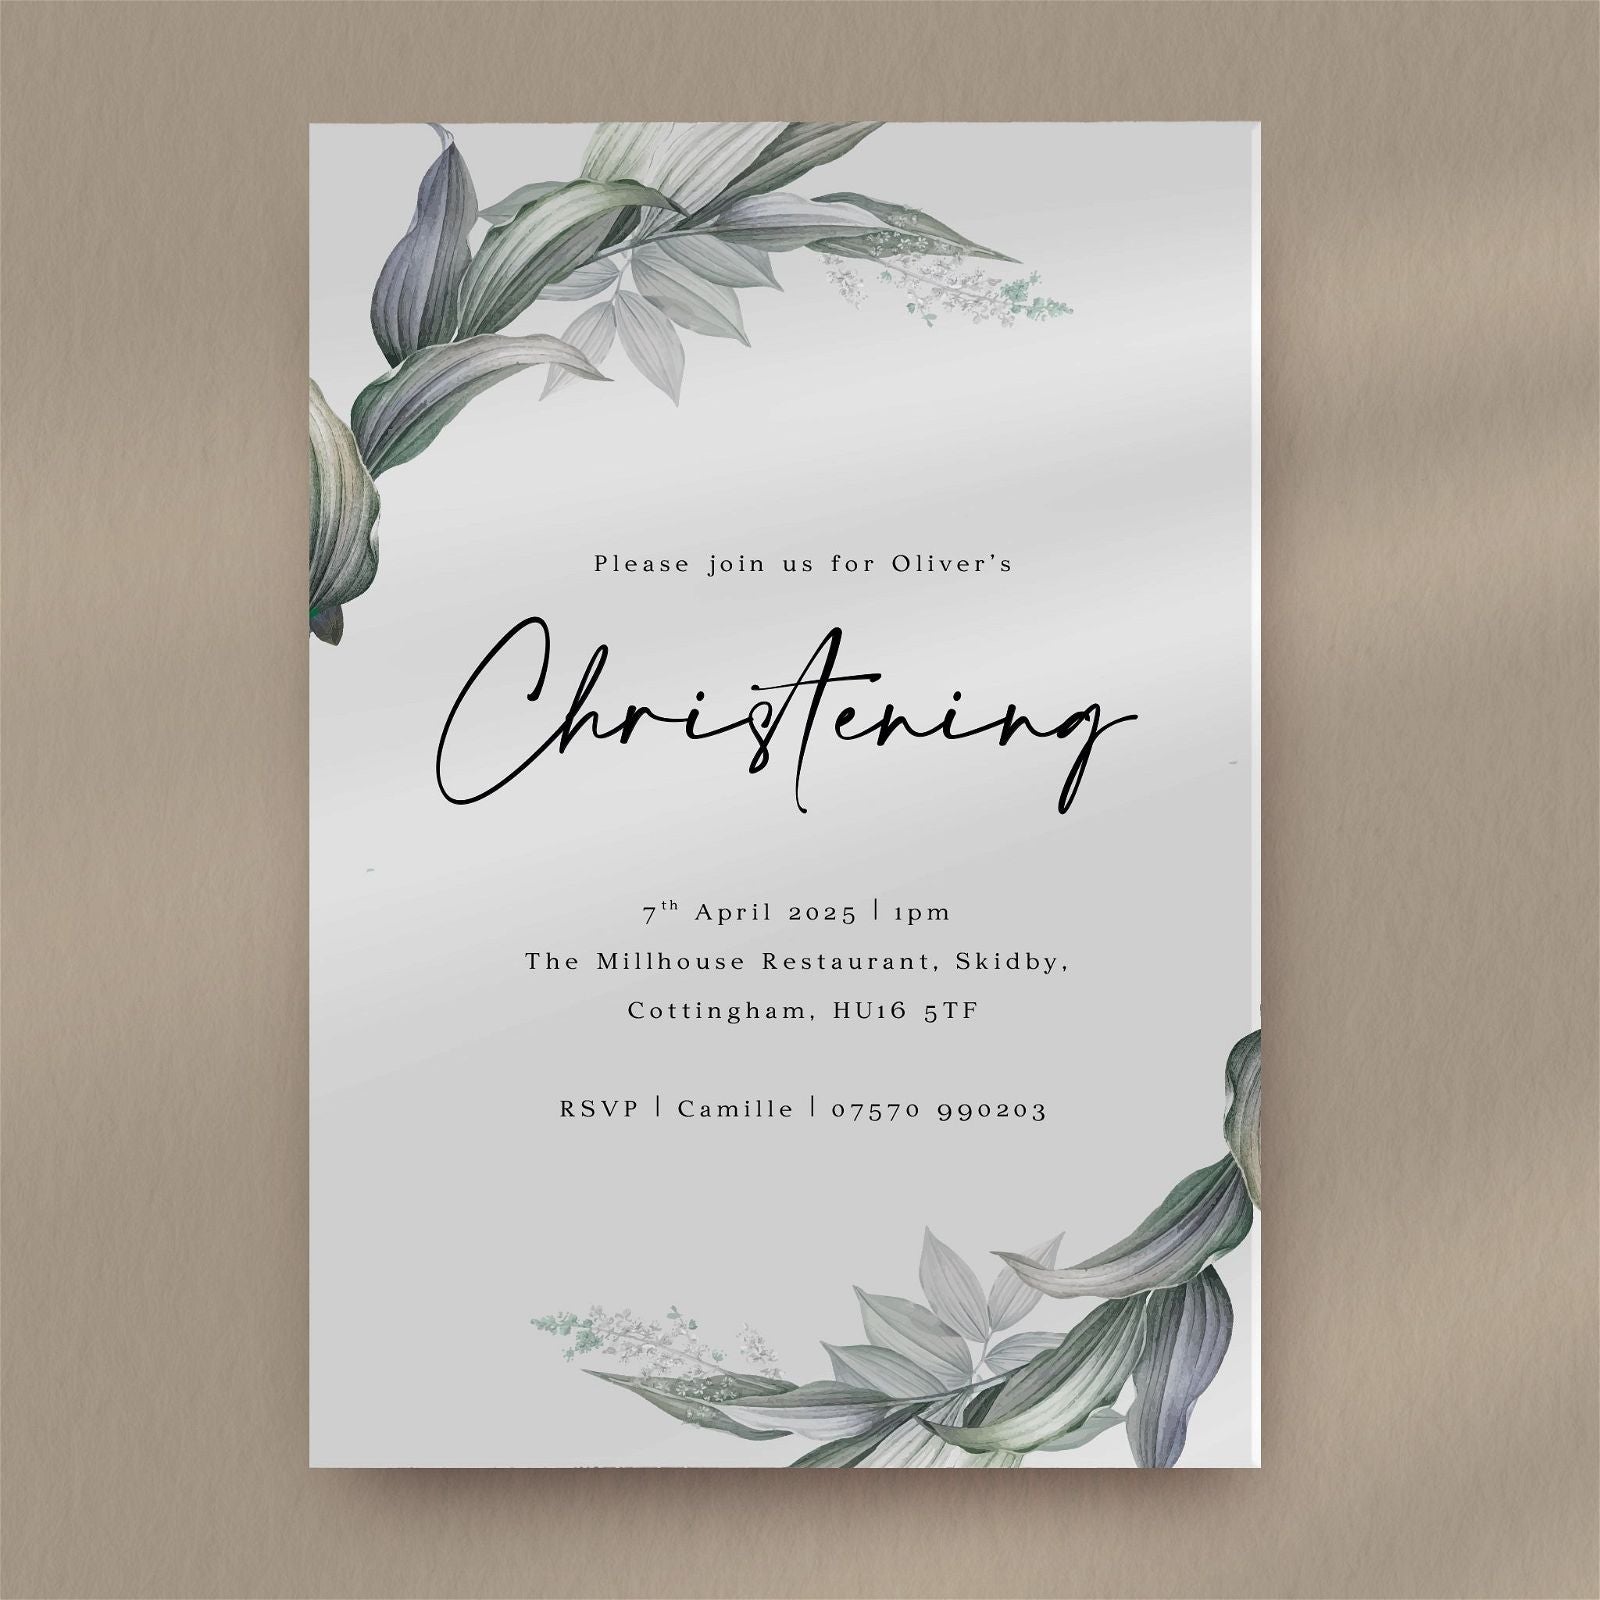 Oliver Christening Invitation  Ivy and Gold Wedding Stationery   